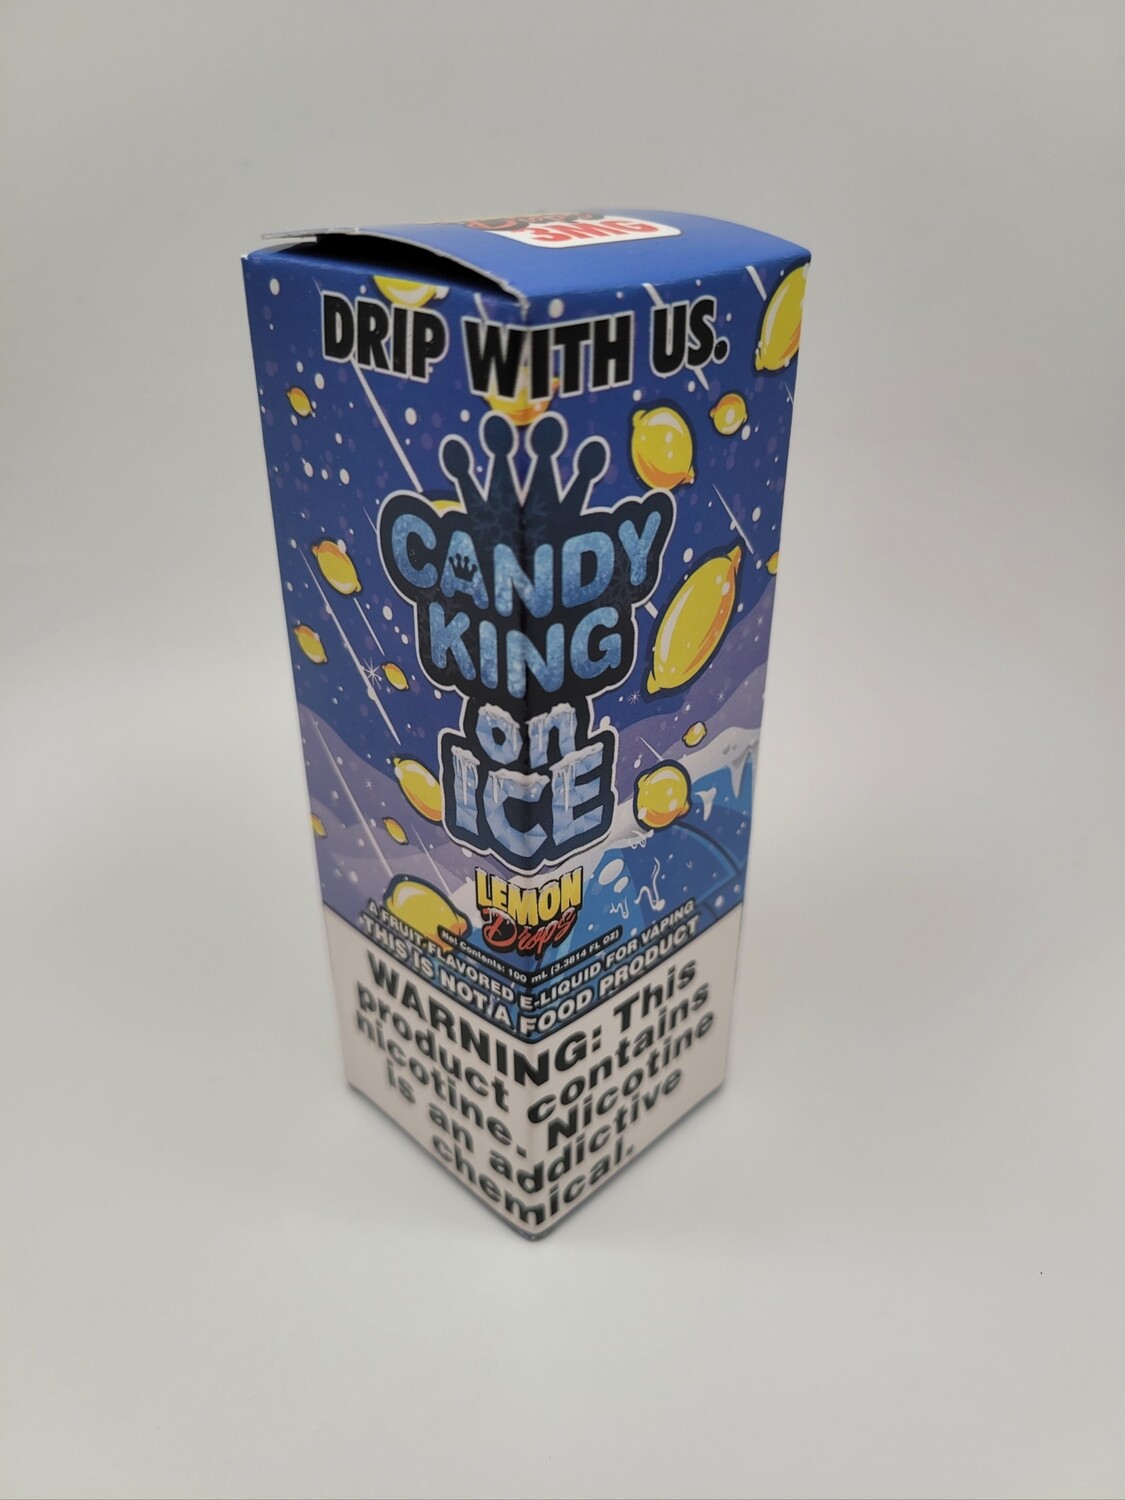 Candy King 100ml Lemon Drops on ice